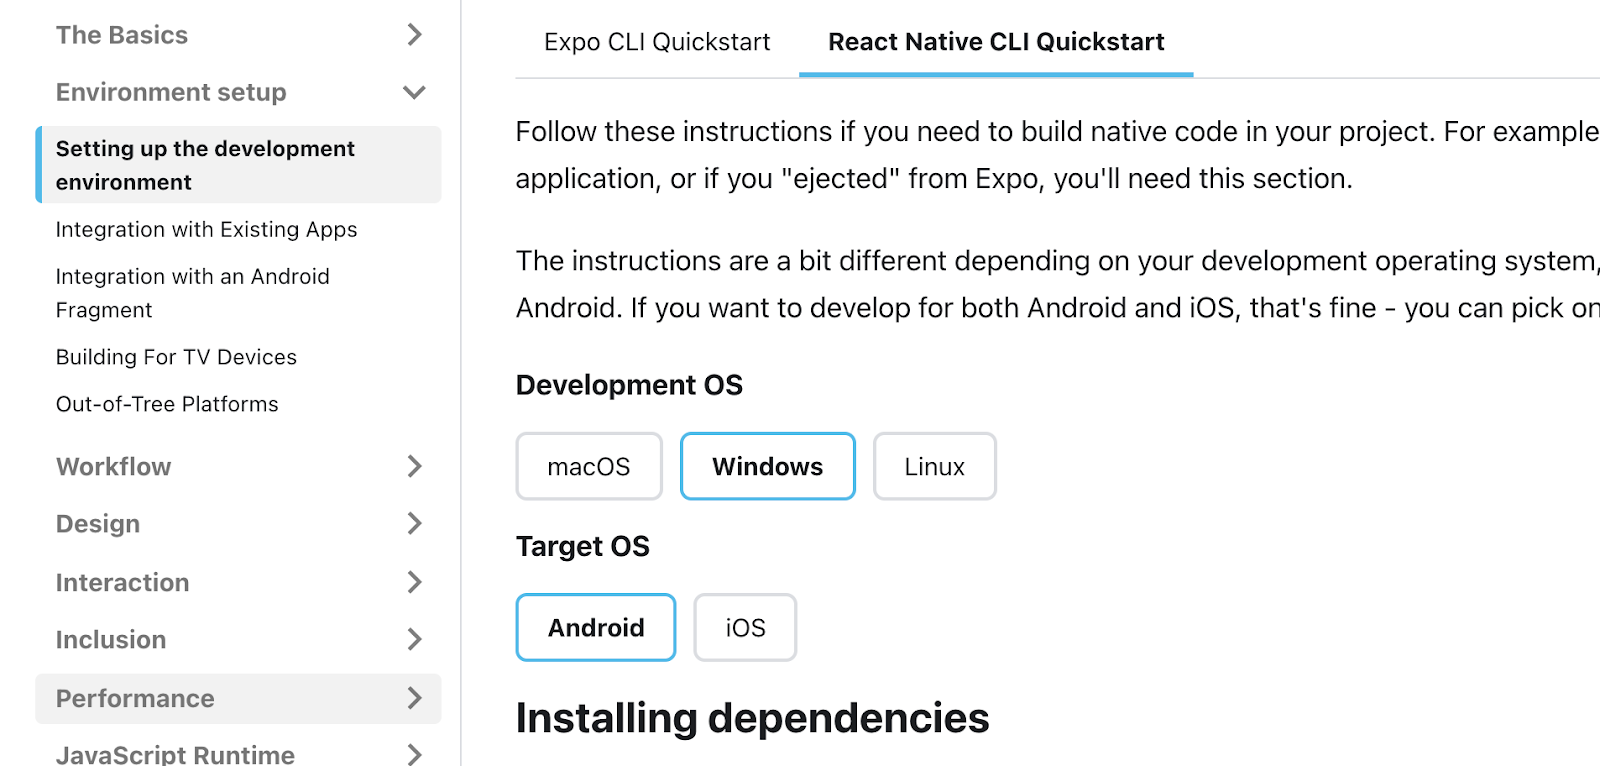 react native CLI quickstart docs